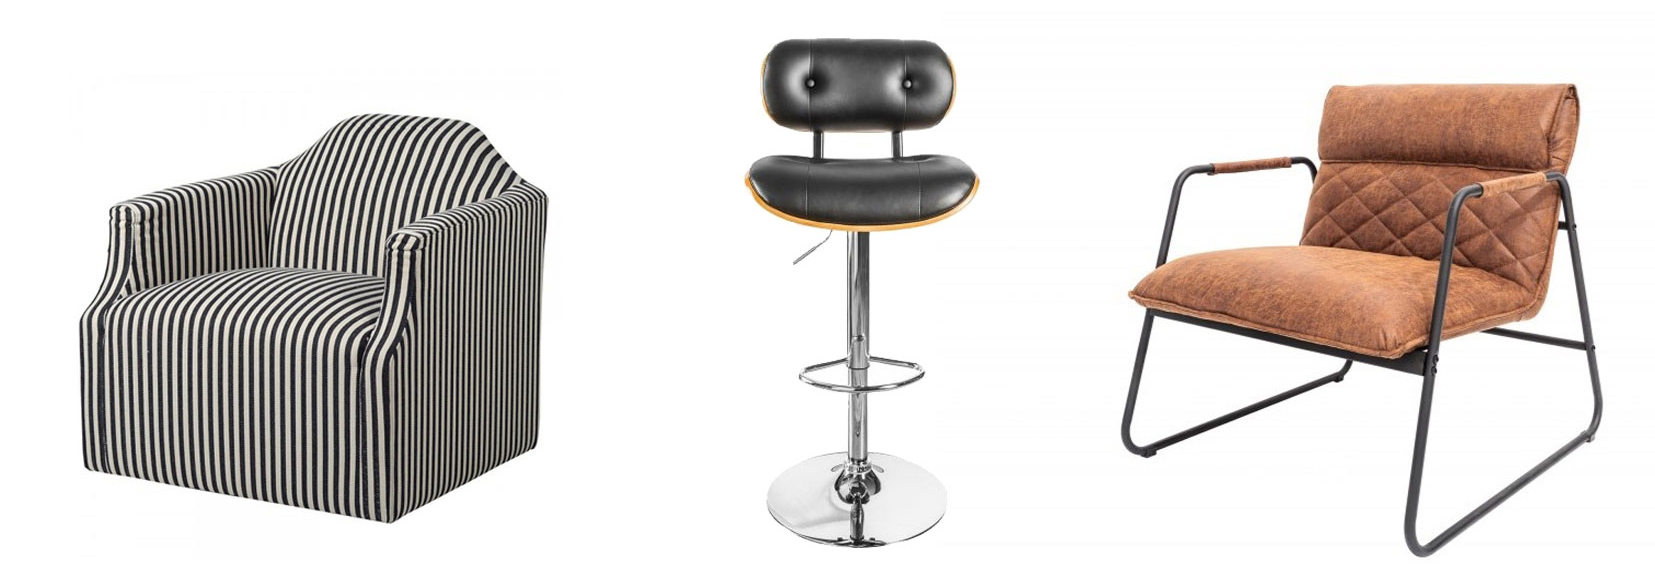 retro pruhované černo-bílé kŘeslo Arkadda, Barová židle Timna v retro stylu, Retro designové křeslo Olympus hnědé barvy z ekokuže a kovu